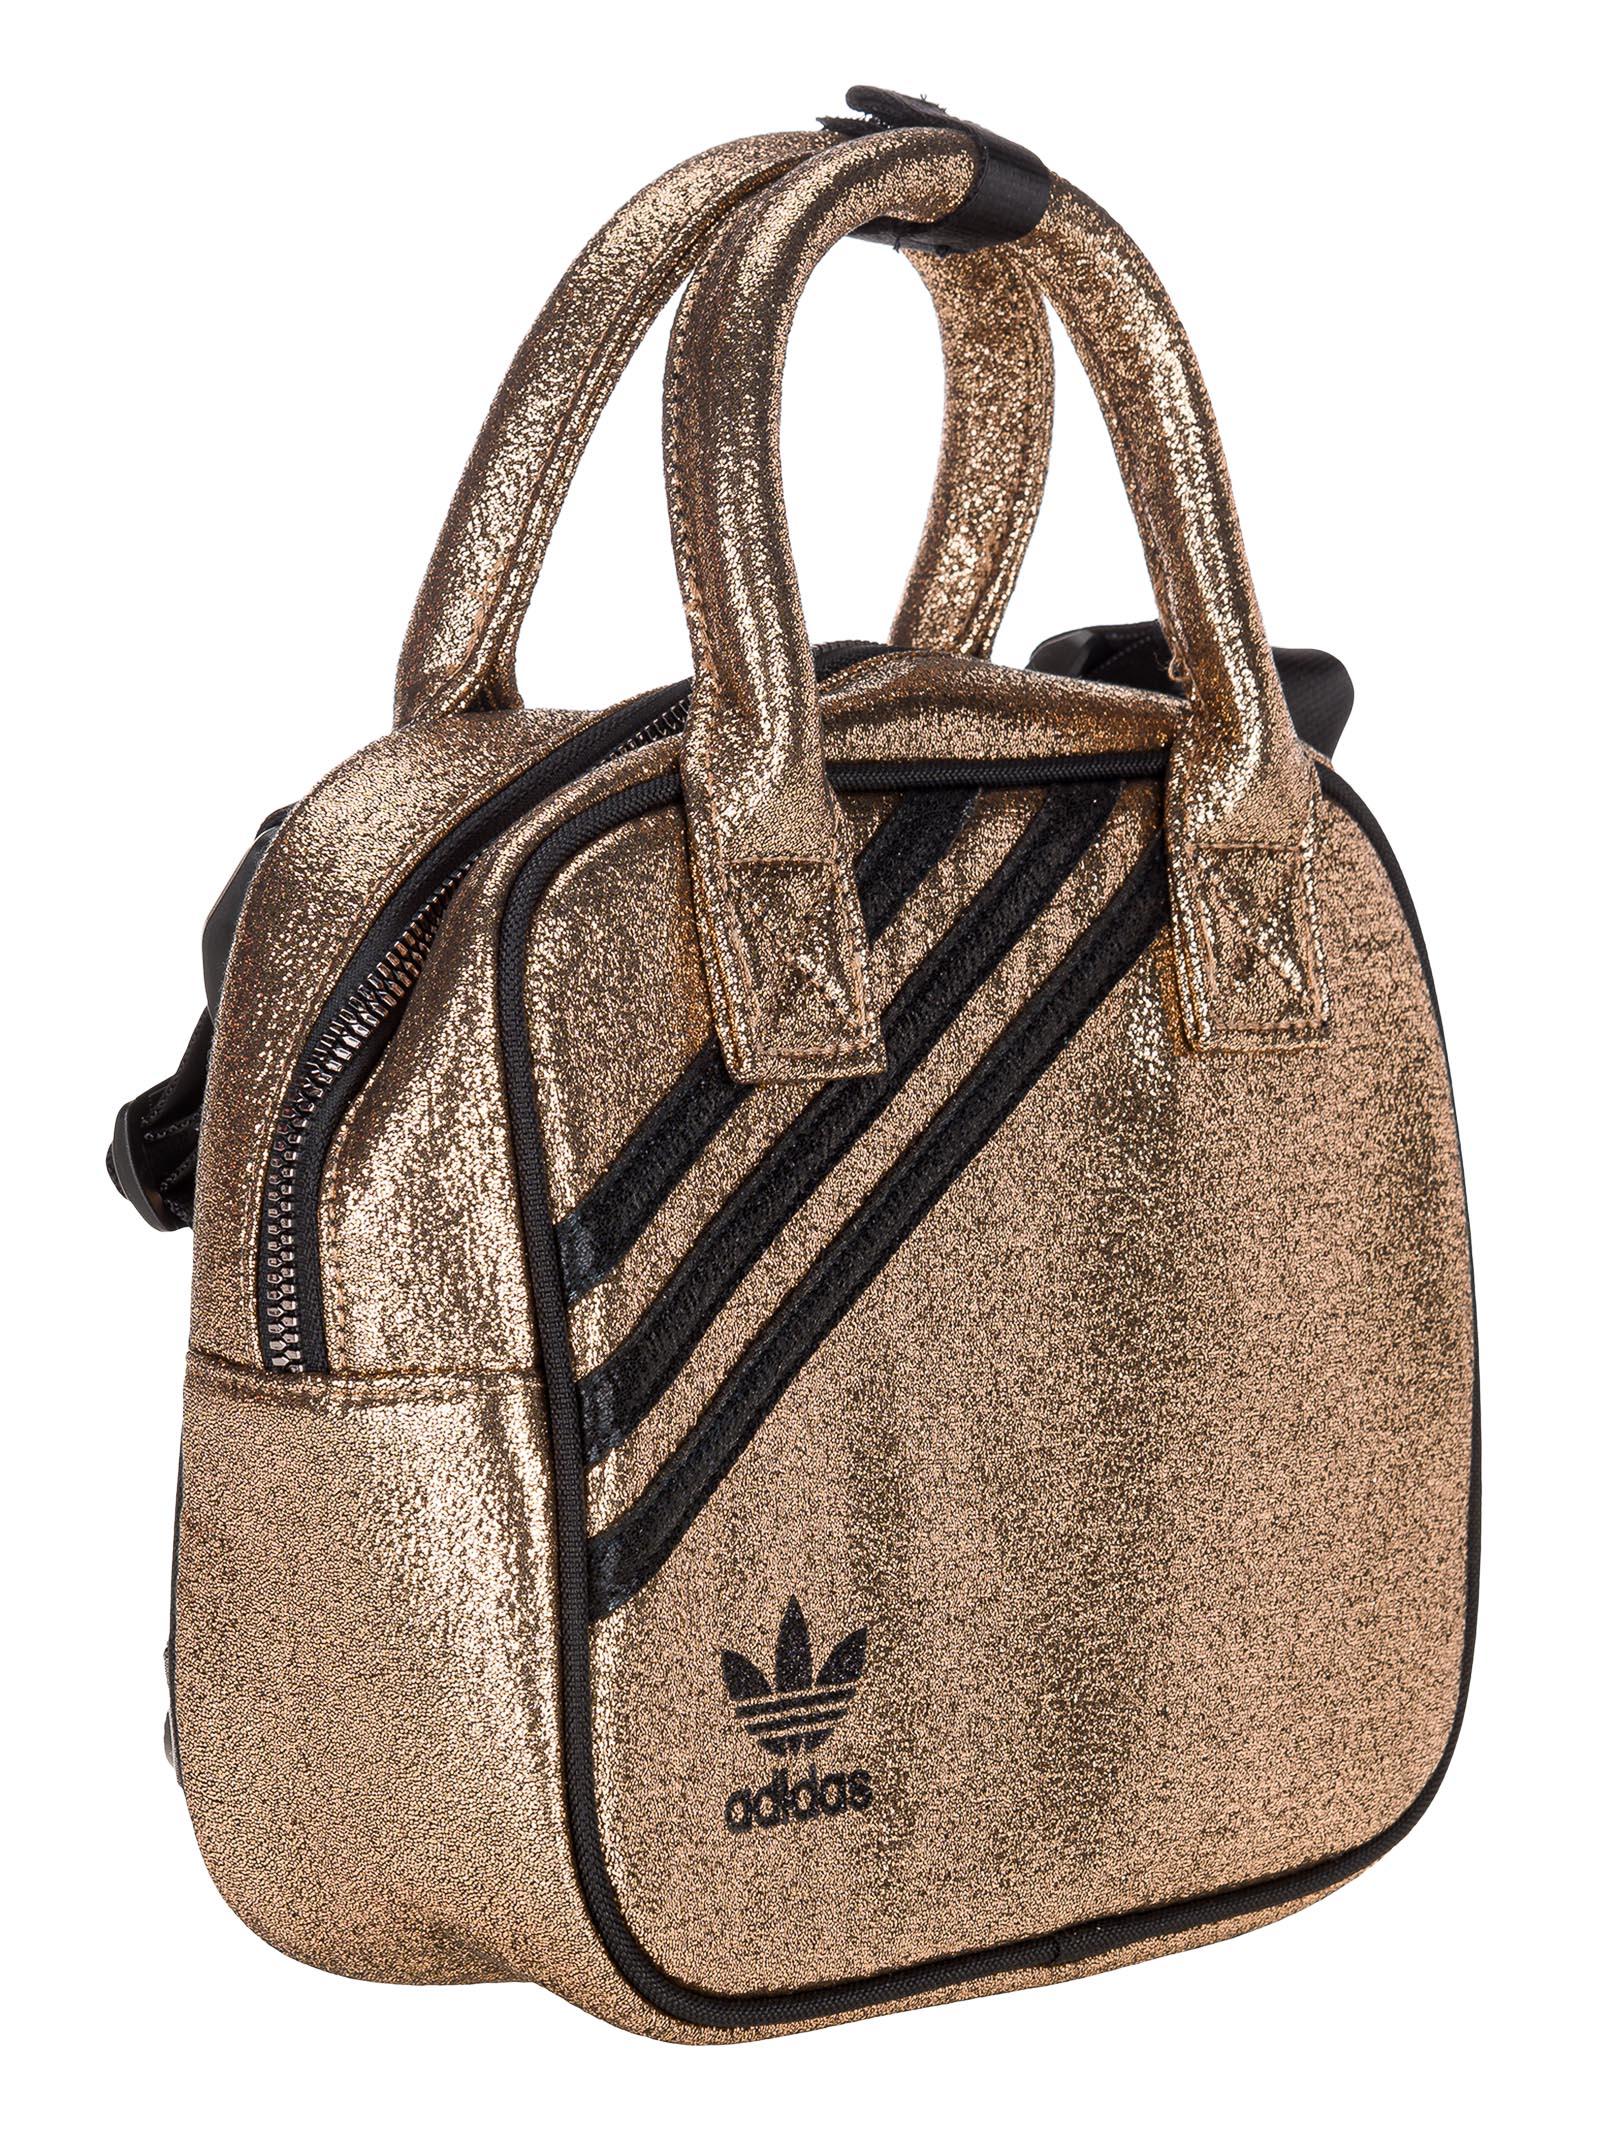 adidas Originals Glitter Top Handle Tote Bag in Metallic | Lyst